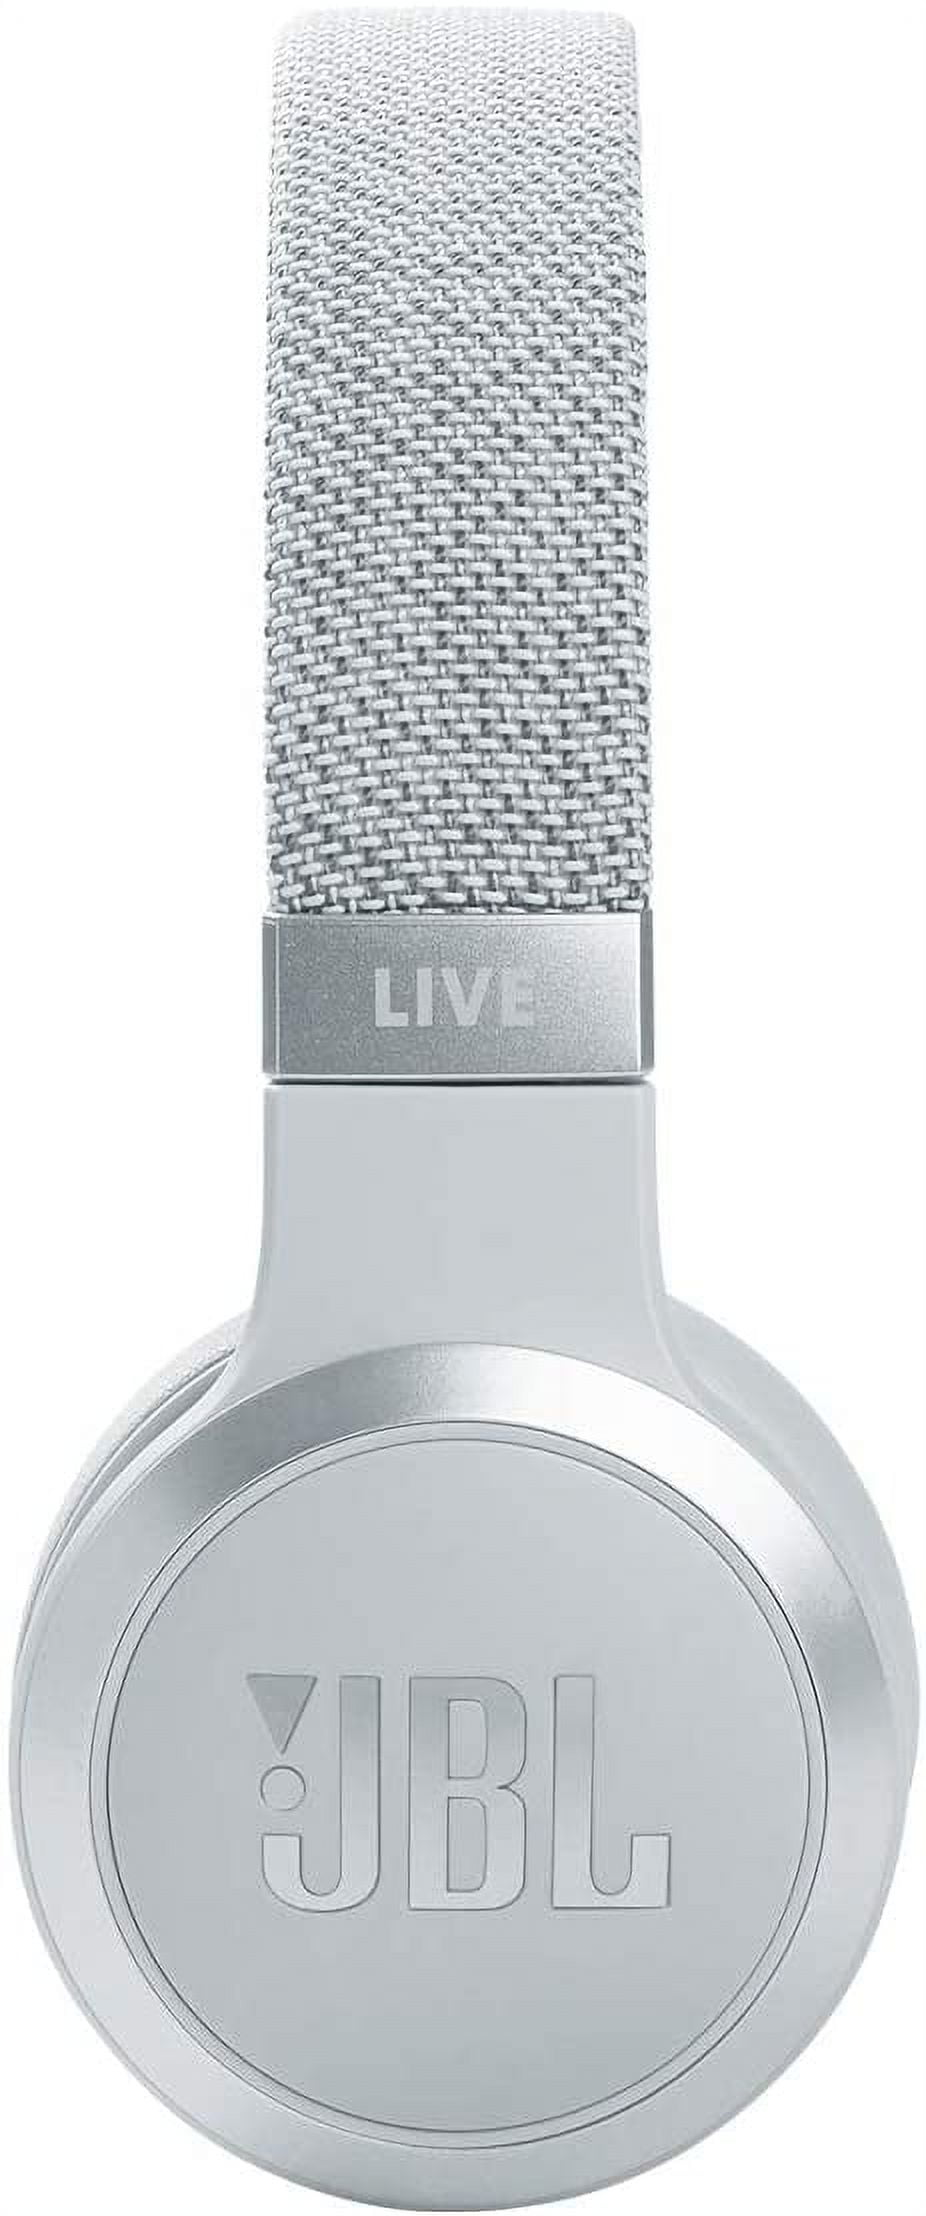 JBL JBLLIVE460NCWHTAM Over-Ear Silver, Noise-Canceling Headphones, Wireless